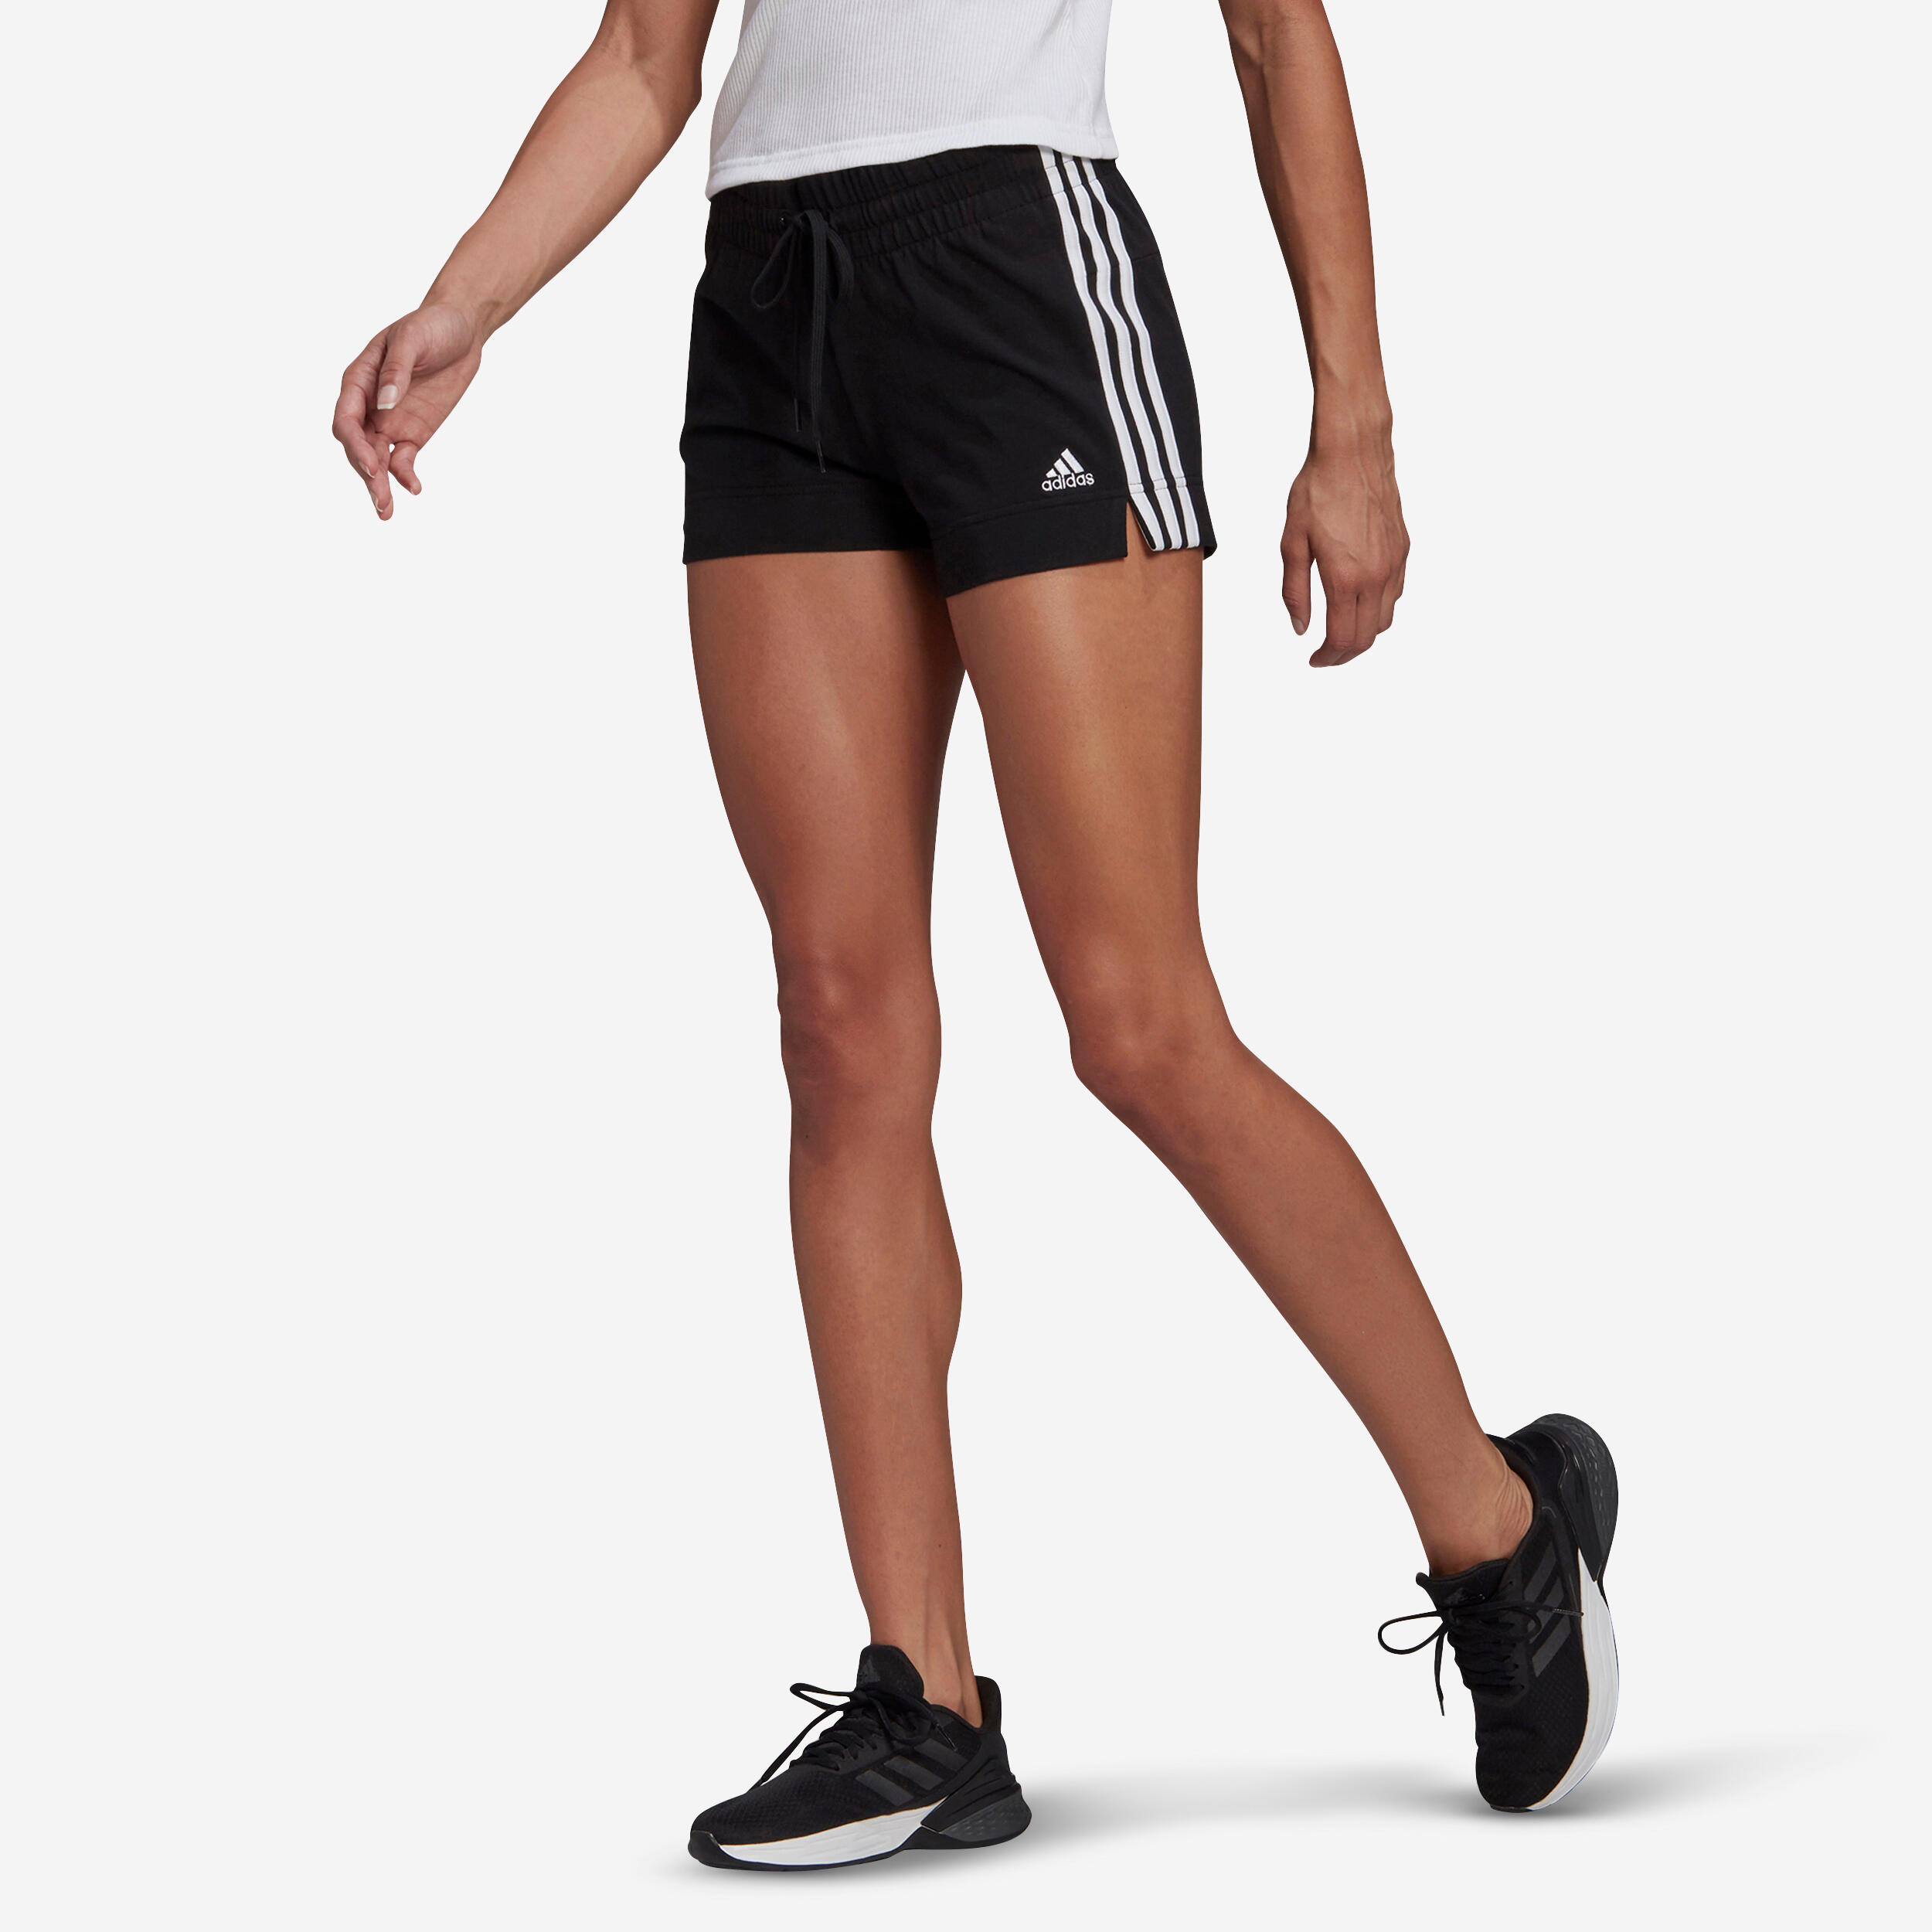 ADIDAS Women's Soft Training Fitness Shorts - Black